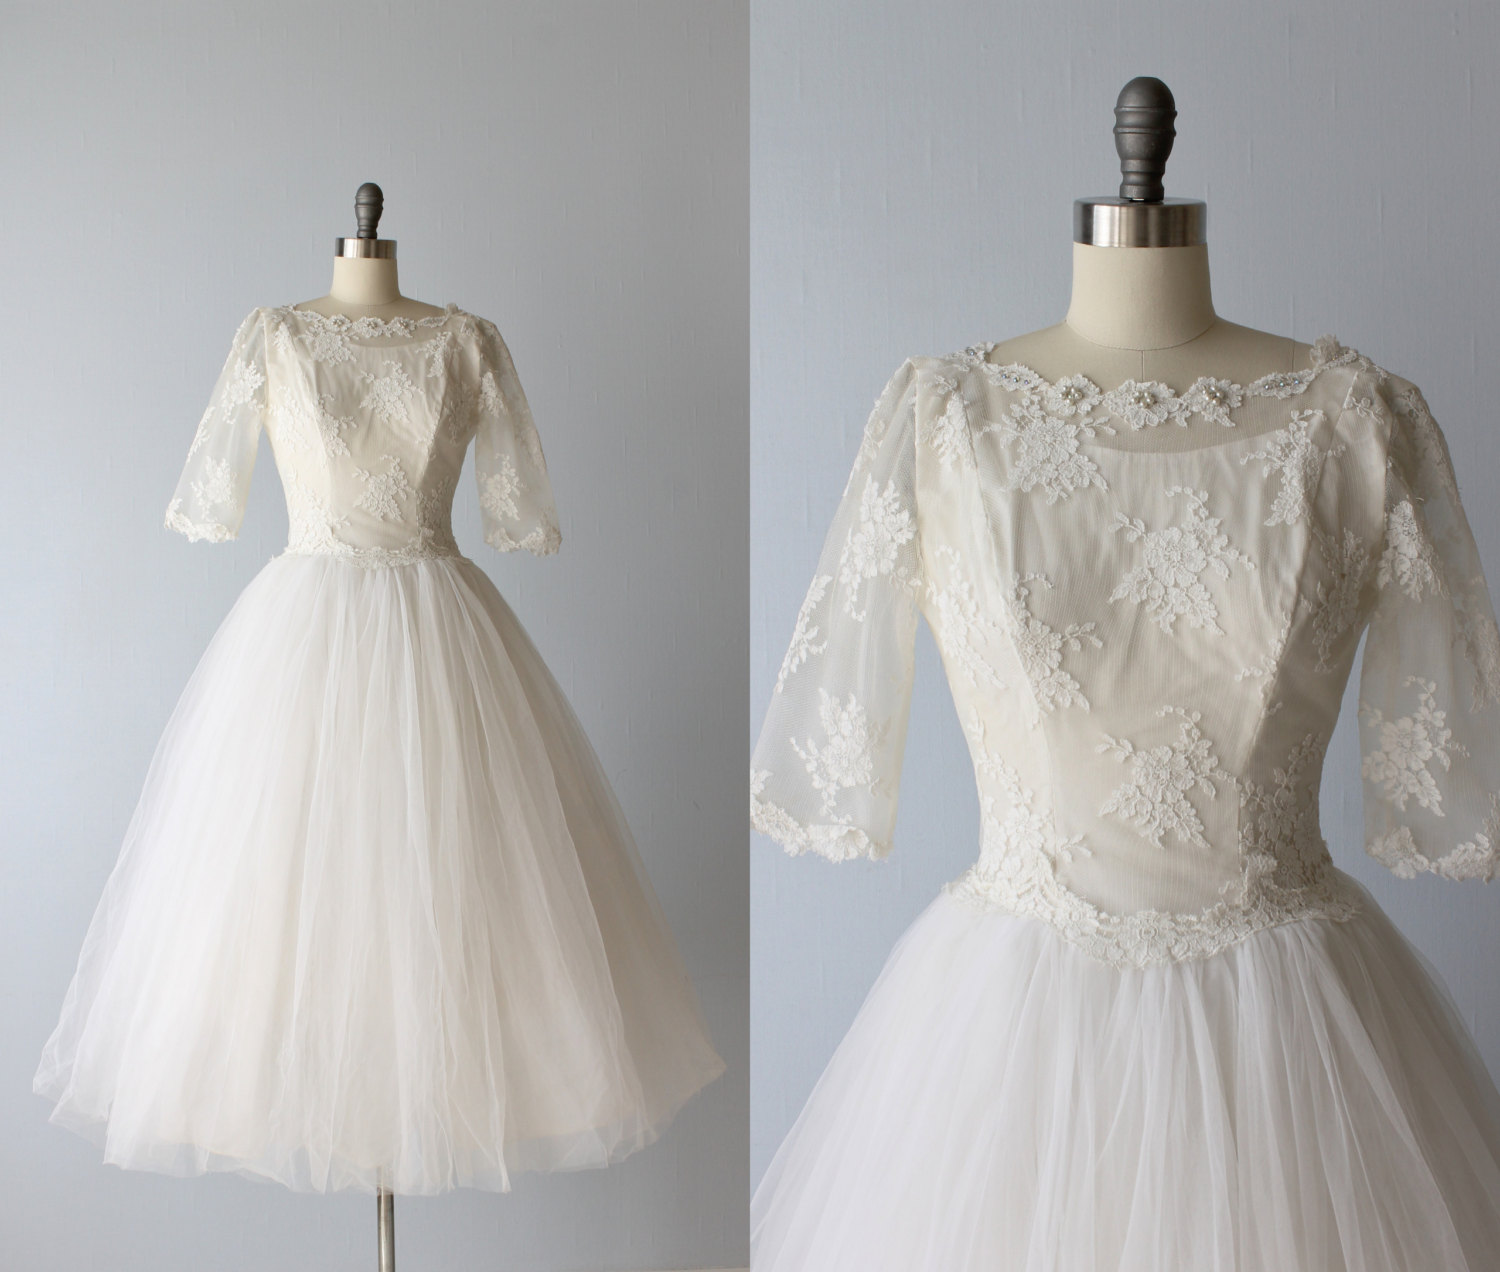 1950s Vintage Wedding Dress from The Vintage Mistress